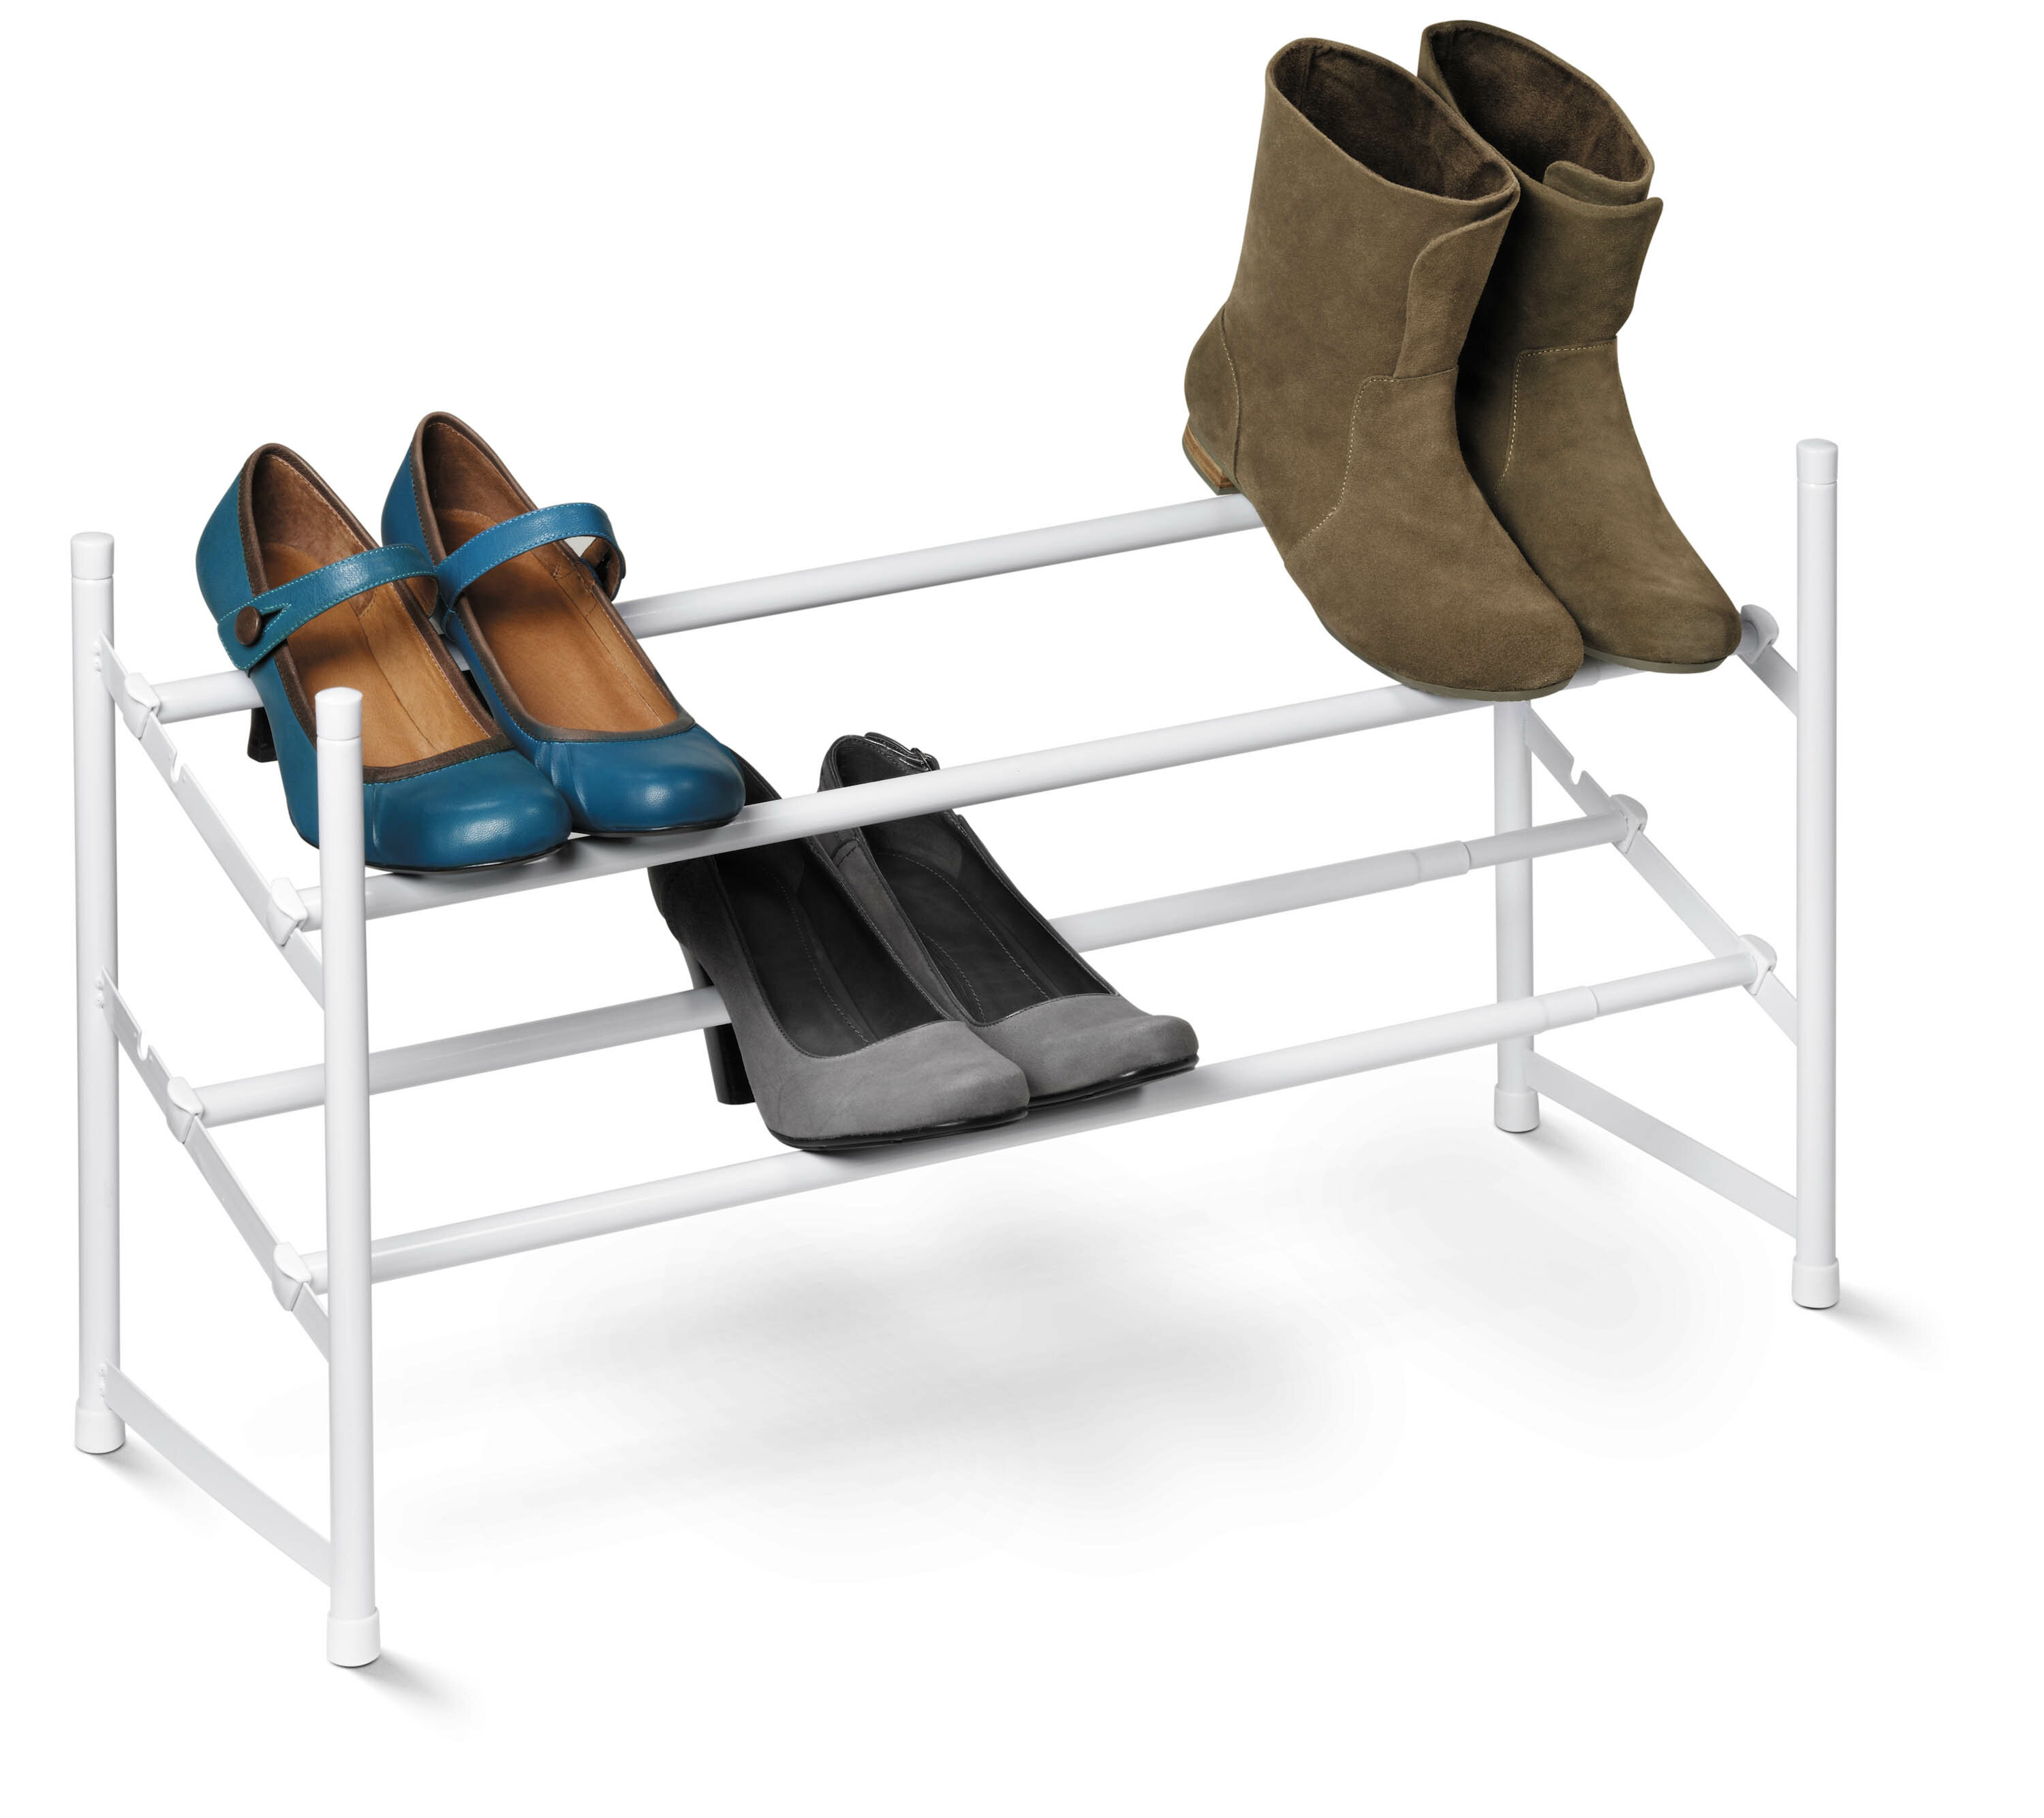 expandable shoe rack